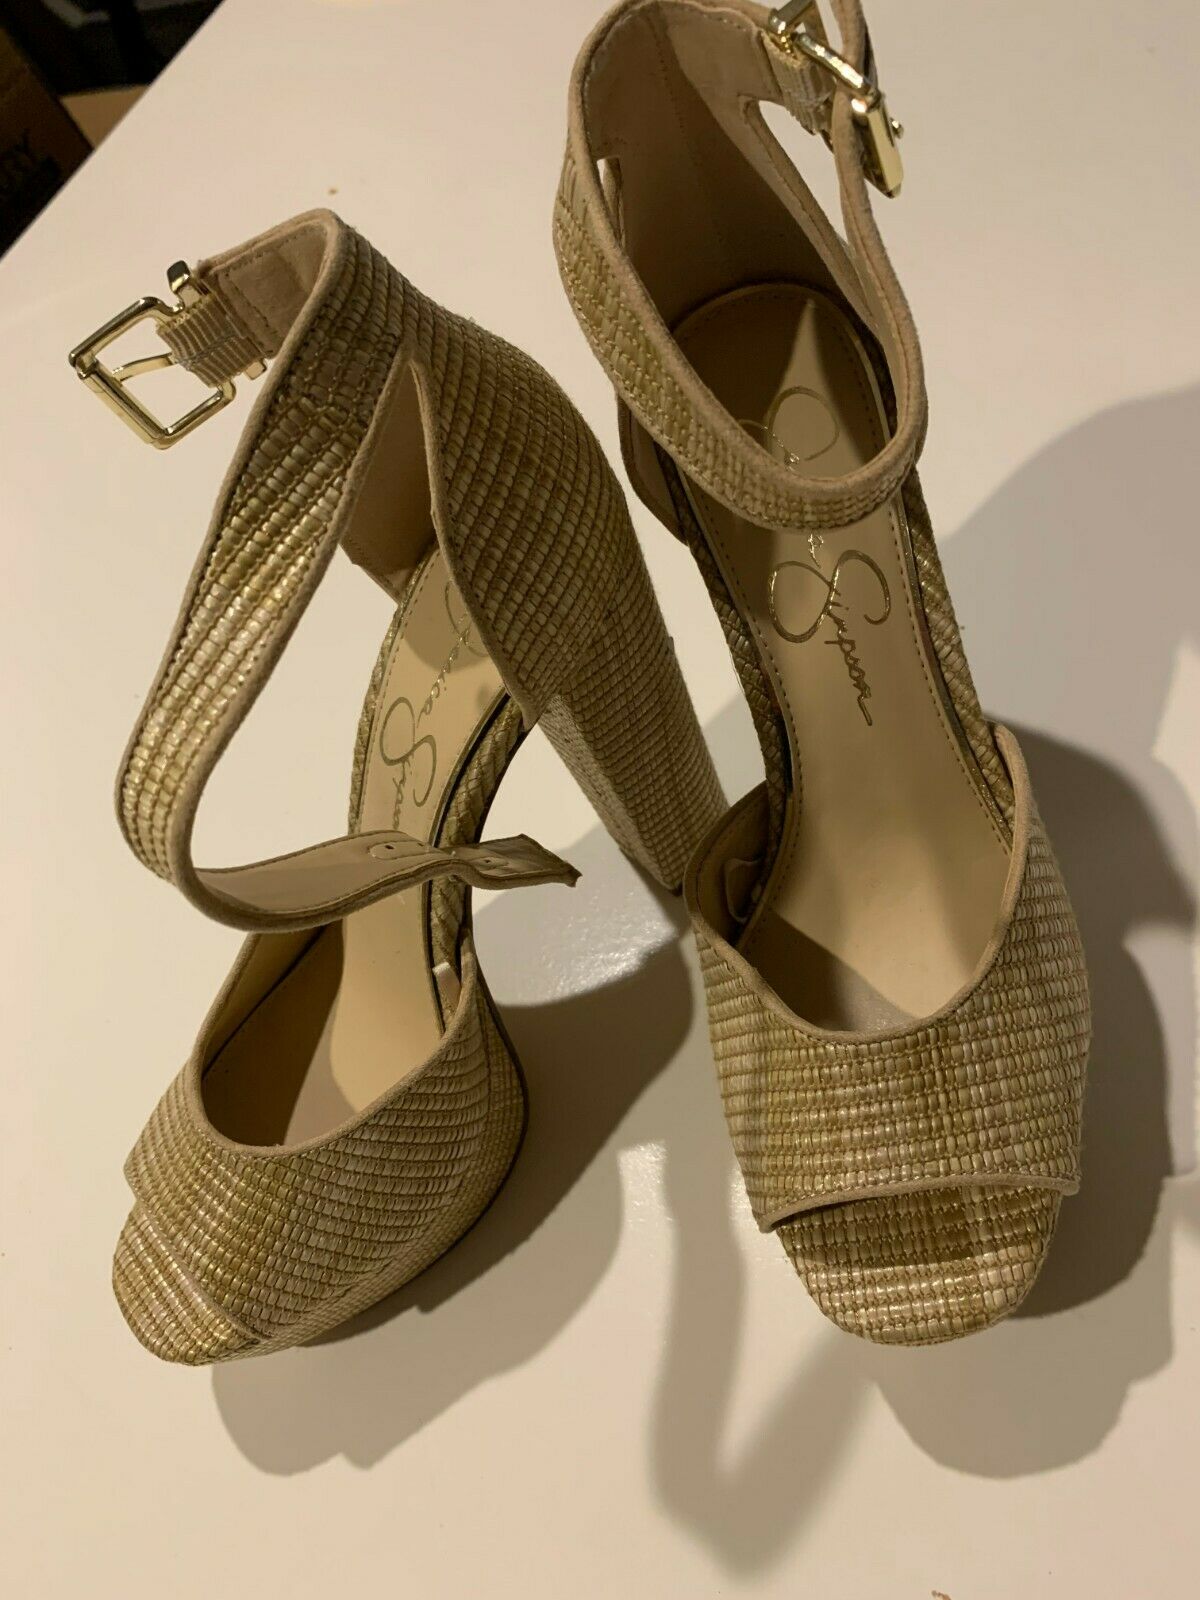 Jessica Simpson shoes women's high heels size 7